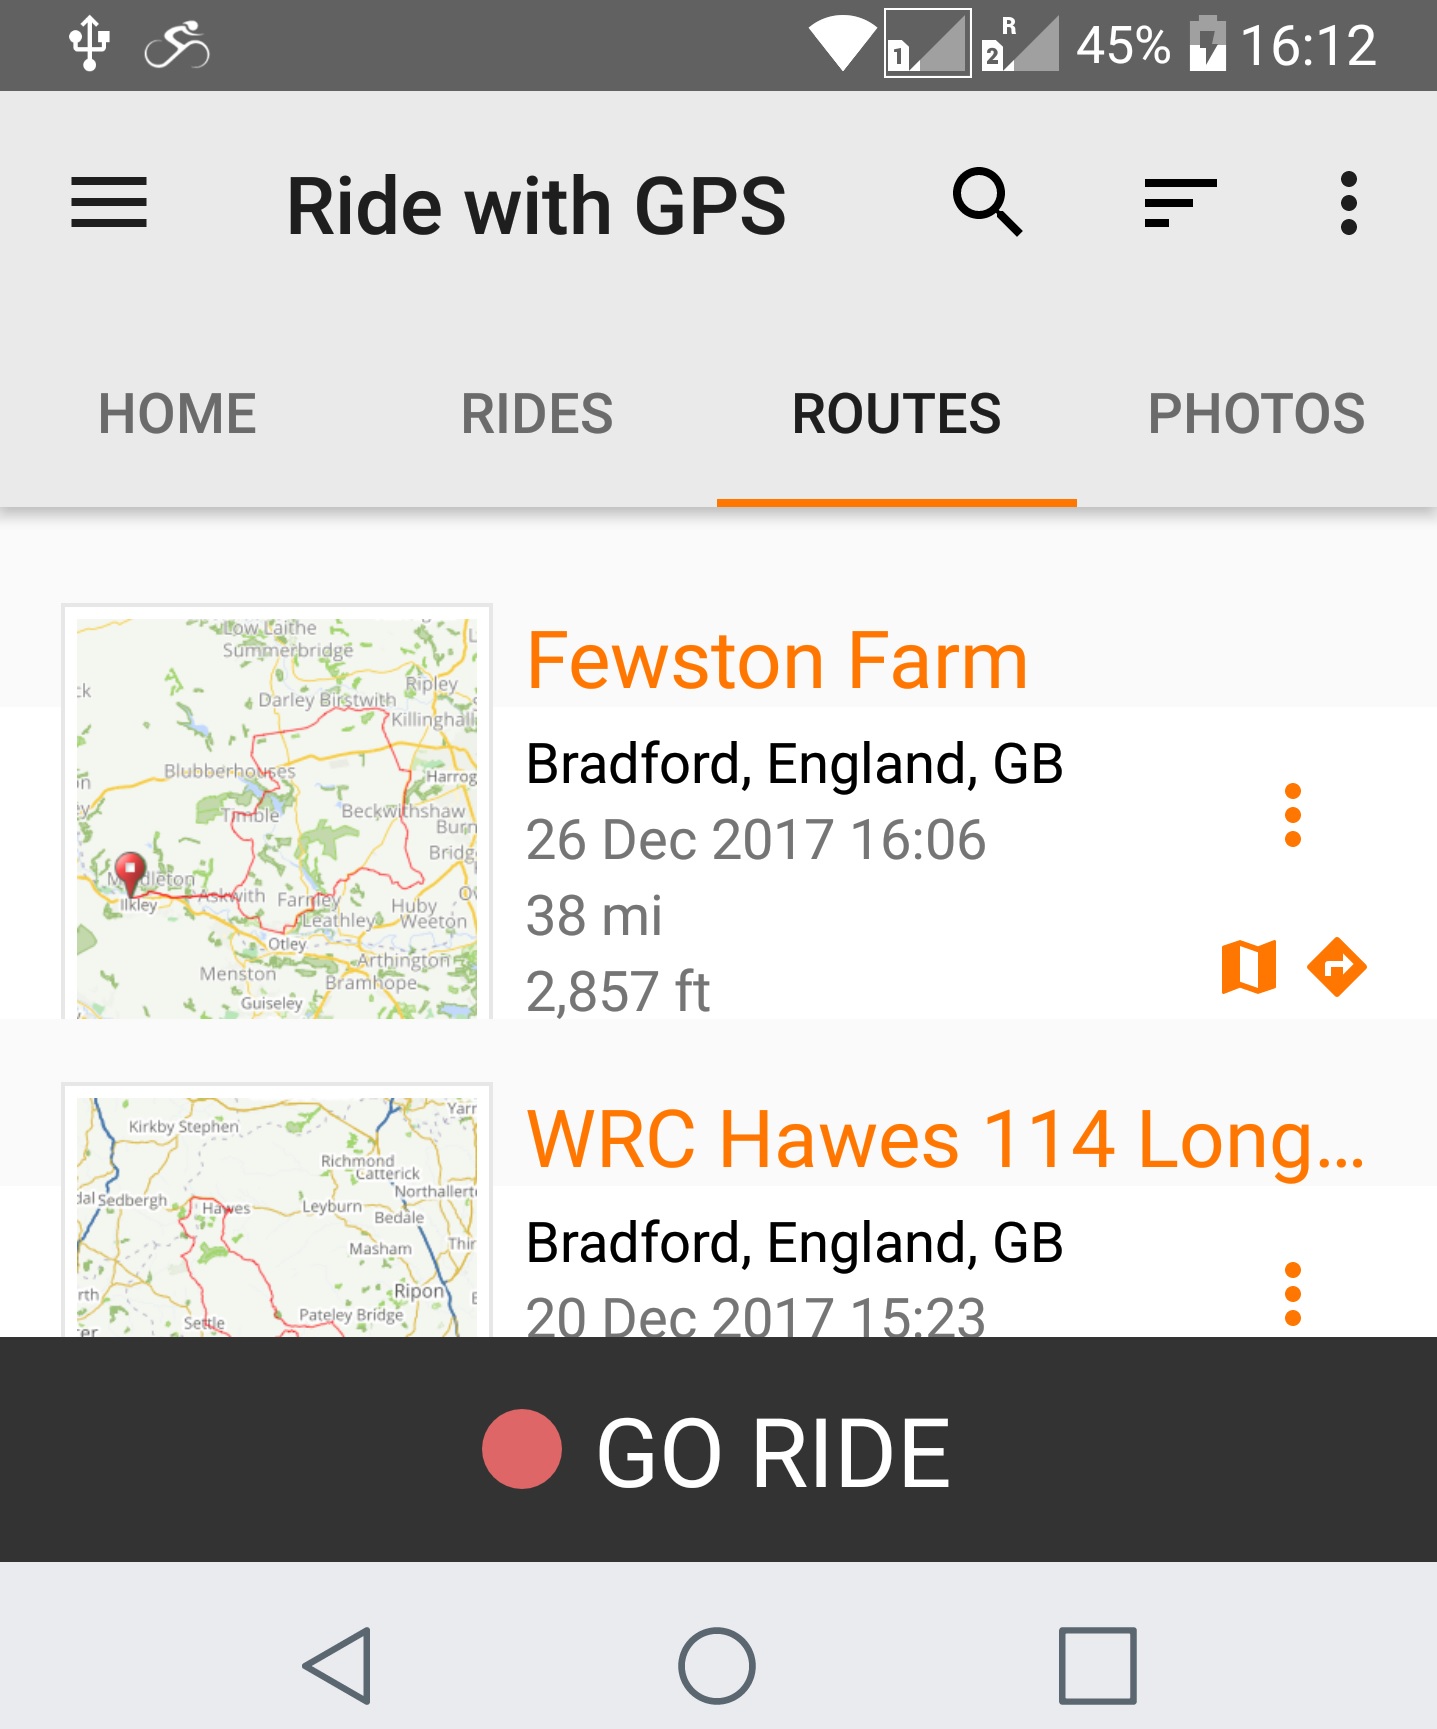 RidewithGPS smartphone cycling app